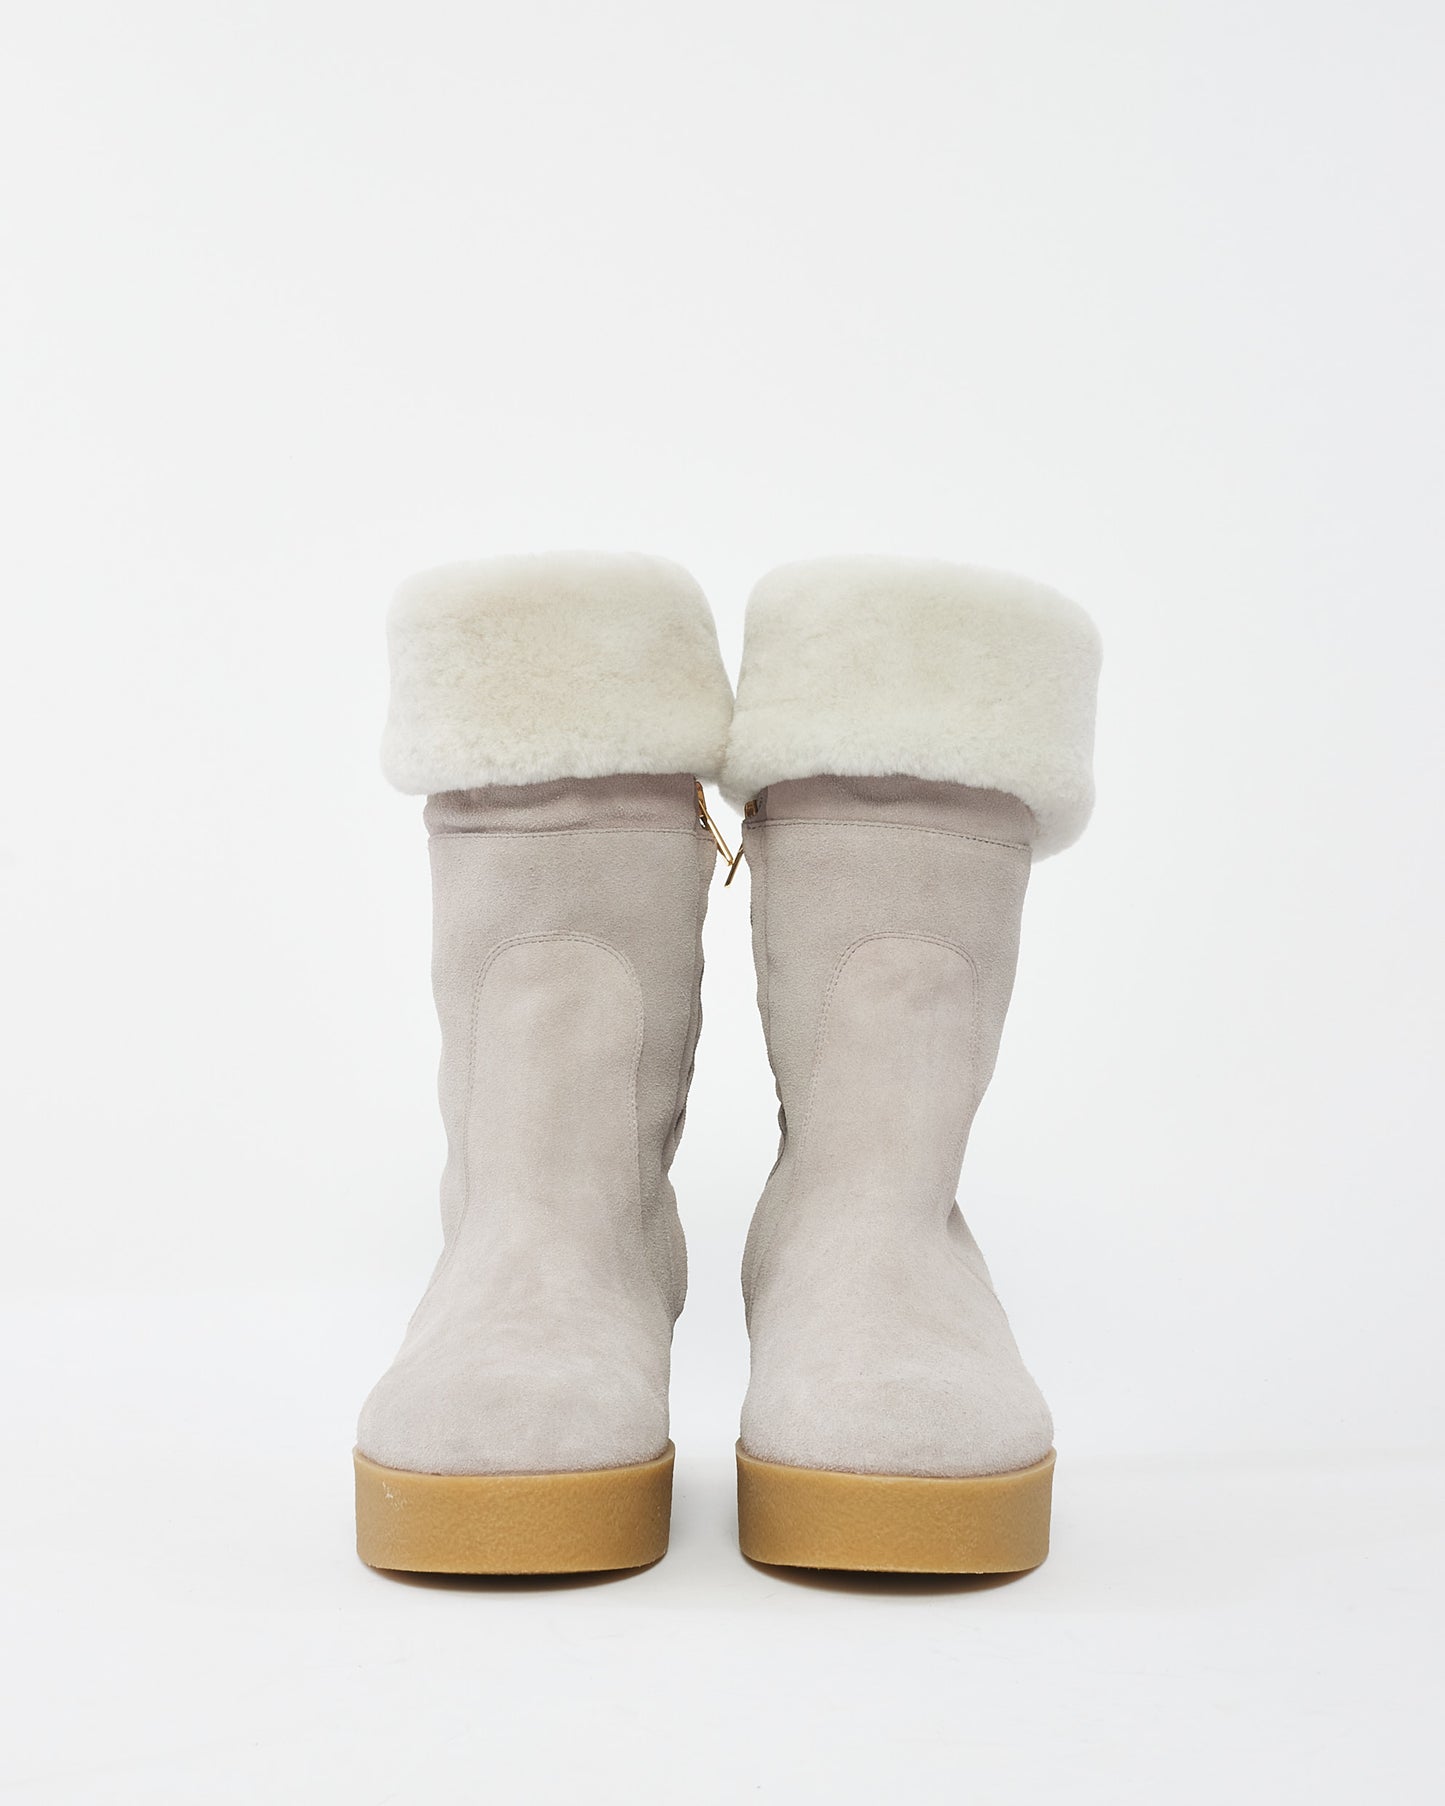 Salvatore Ferragamo Grey Suede & Fur Wedge Boots - 8.5